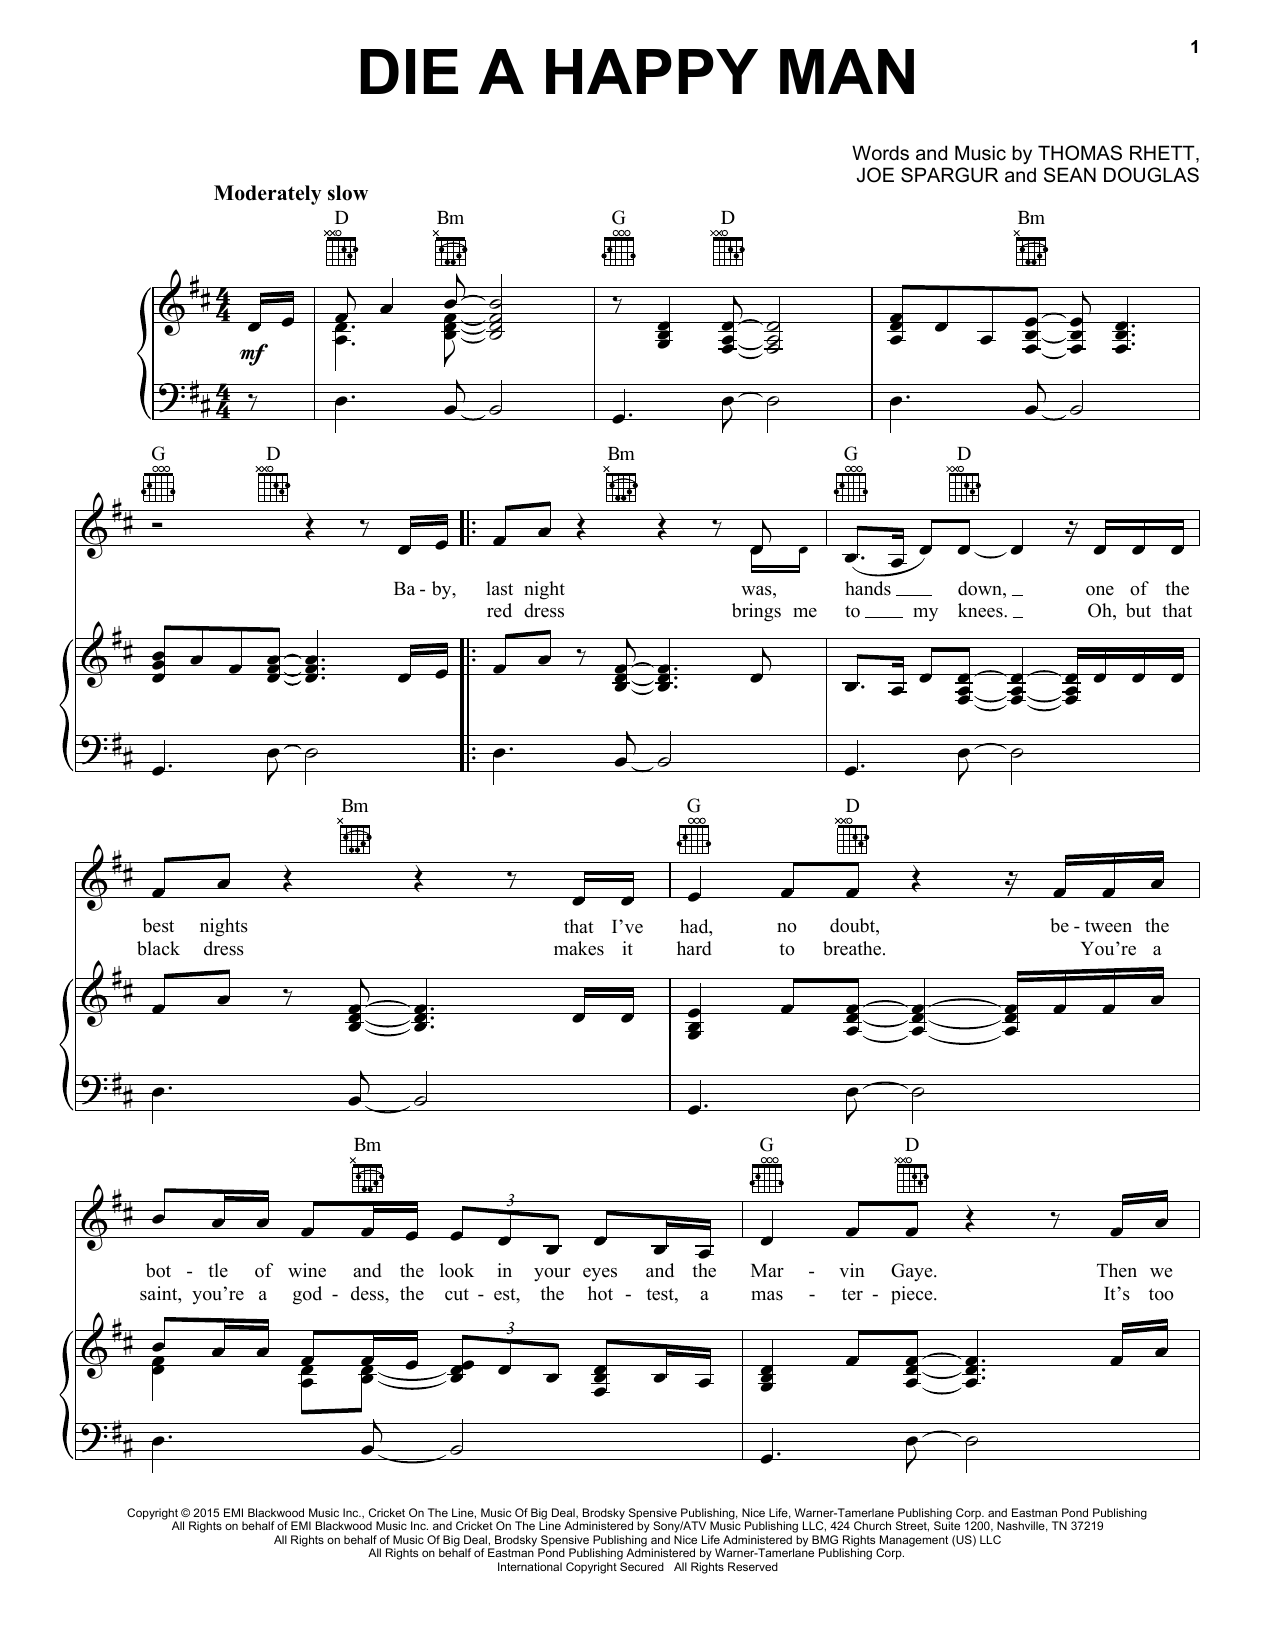 Thomas Rhett Die A Happy Man Sheet Music Notes & Chords for Trumpet - Download or Print PDF